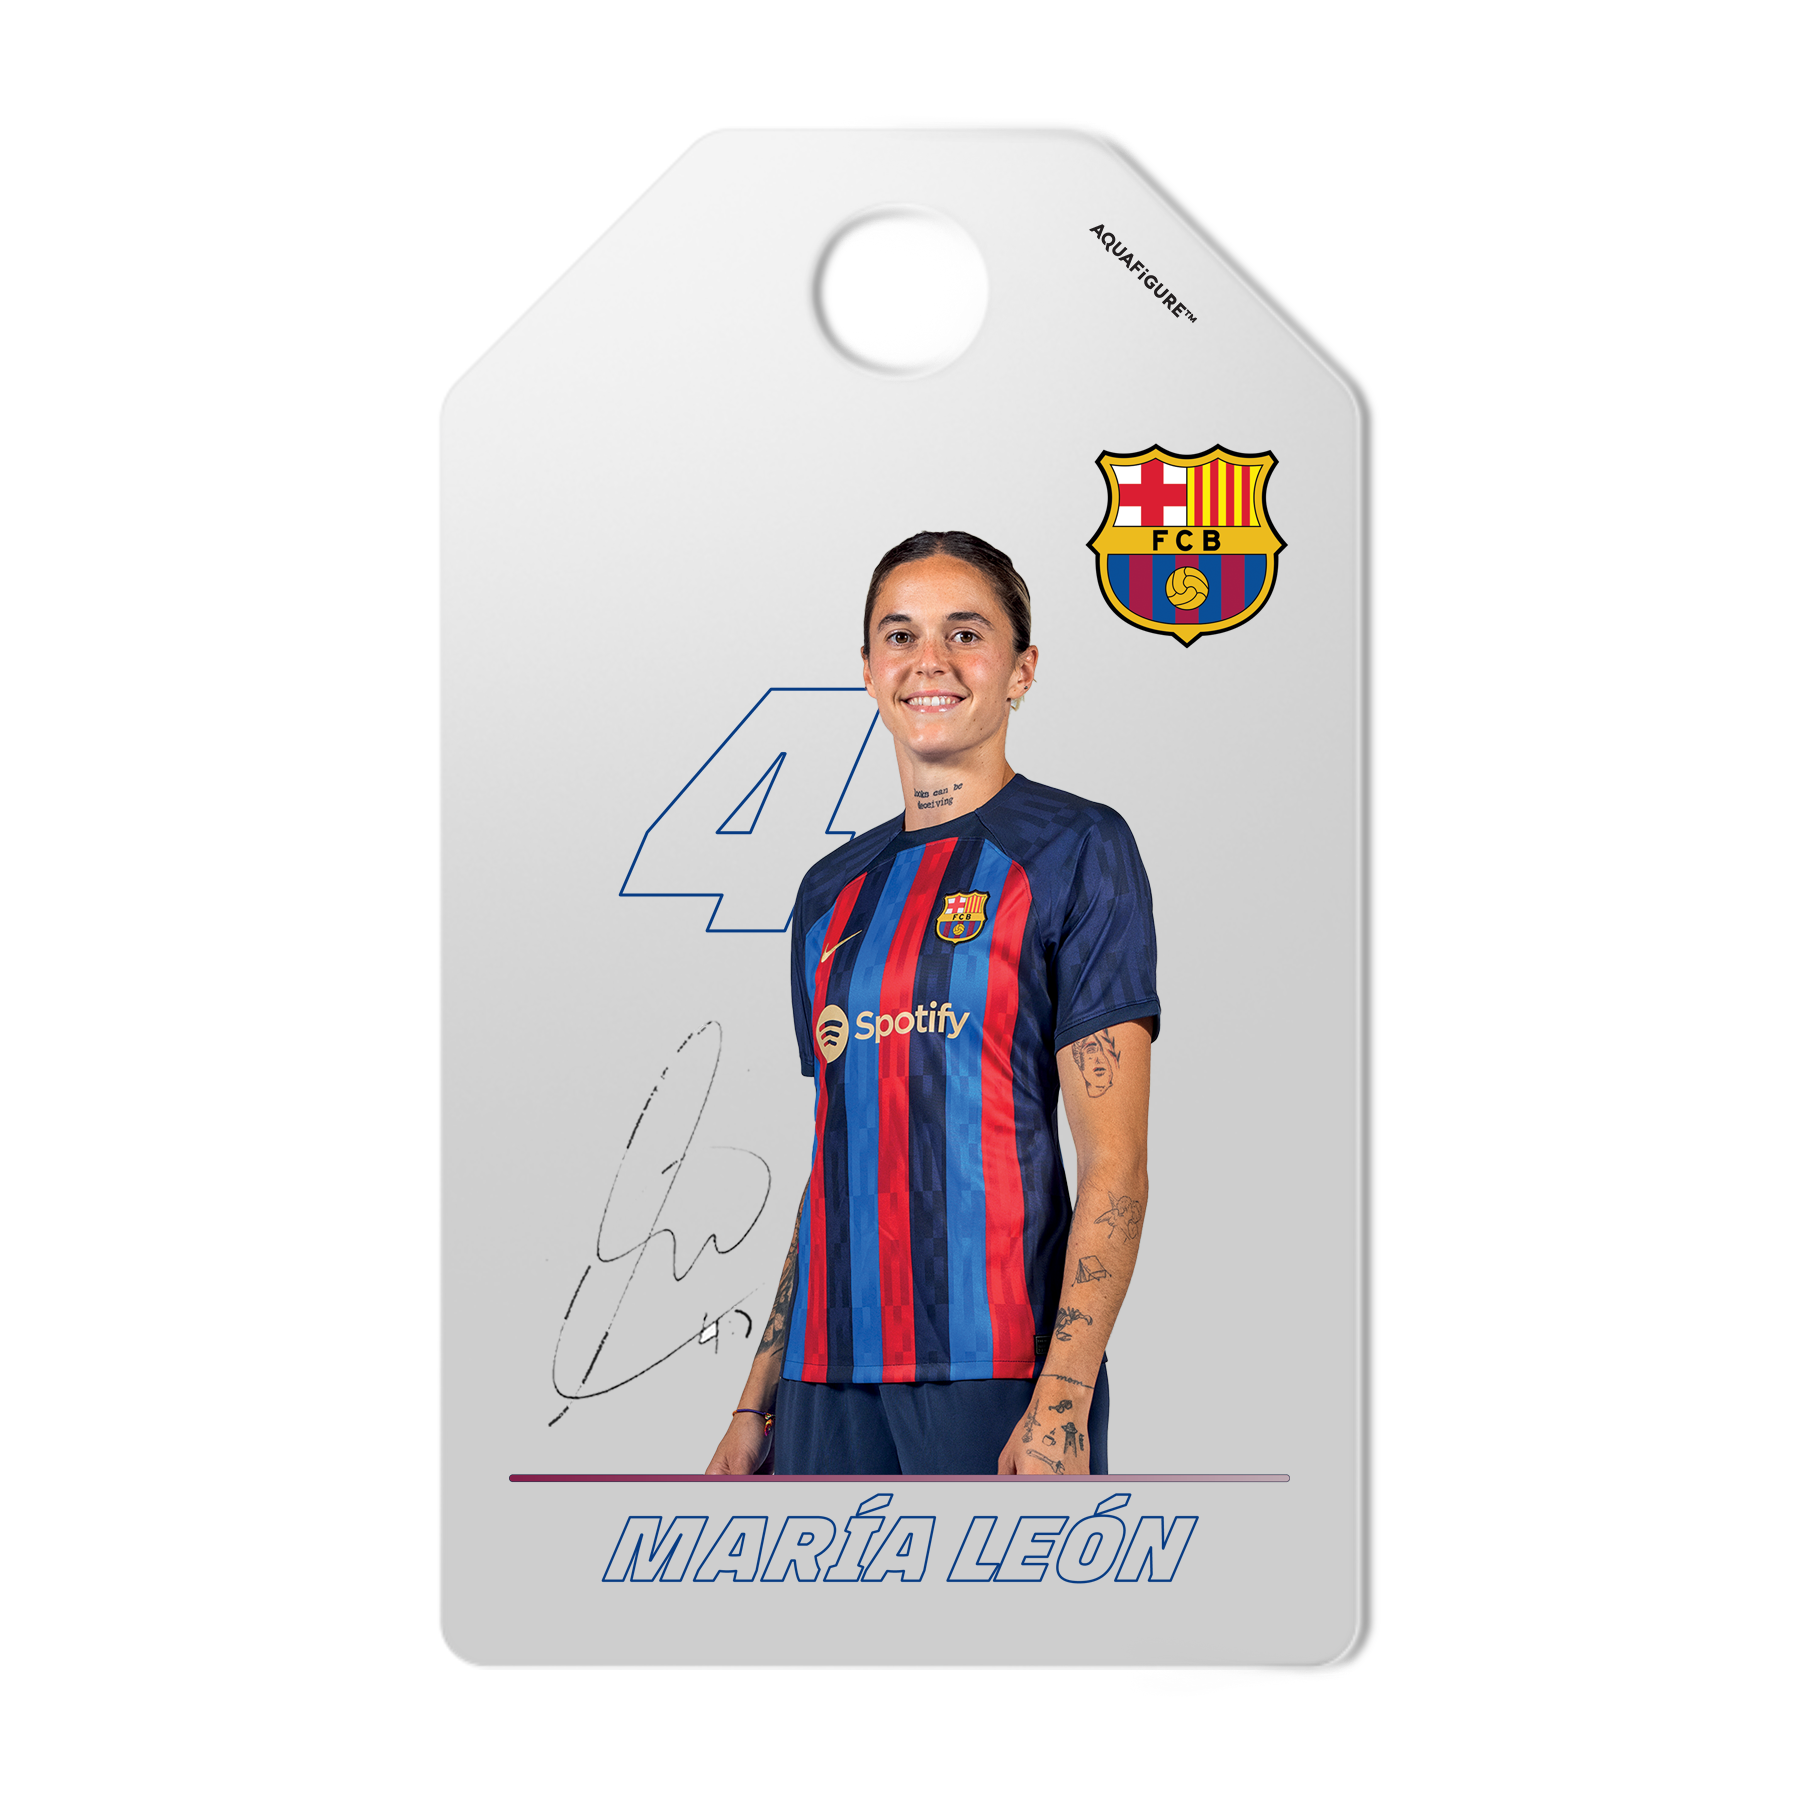 Equipo FC Barcelona femenino - Botella Aquafigure con 6 Tags